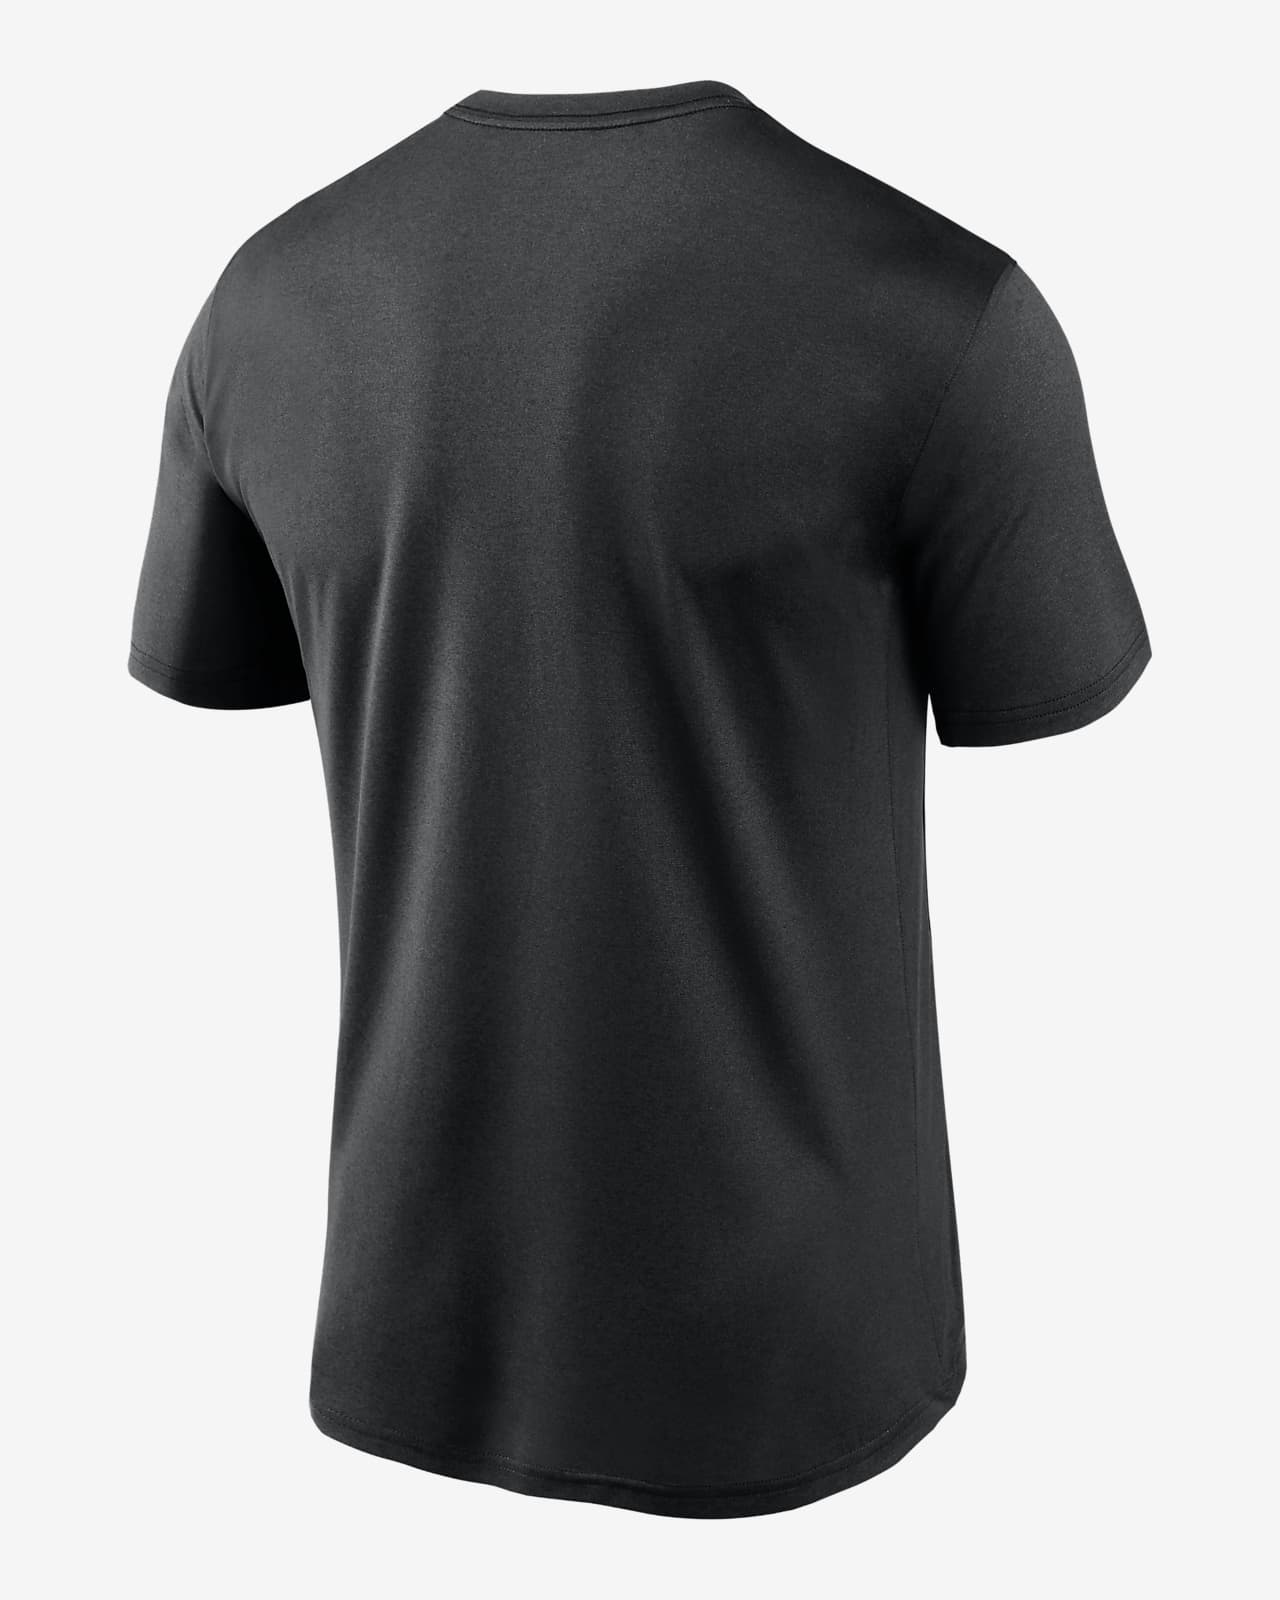 Lids Arizona Diamondbacks Nike Icon Legend Performance T-Shirt - Black